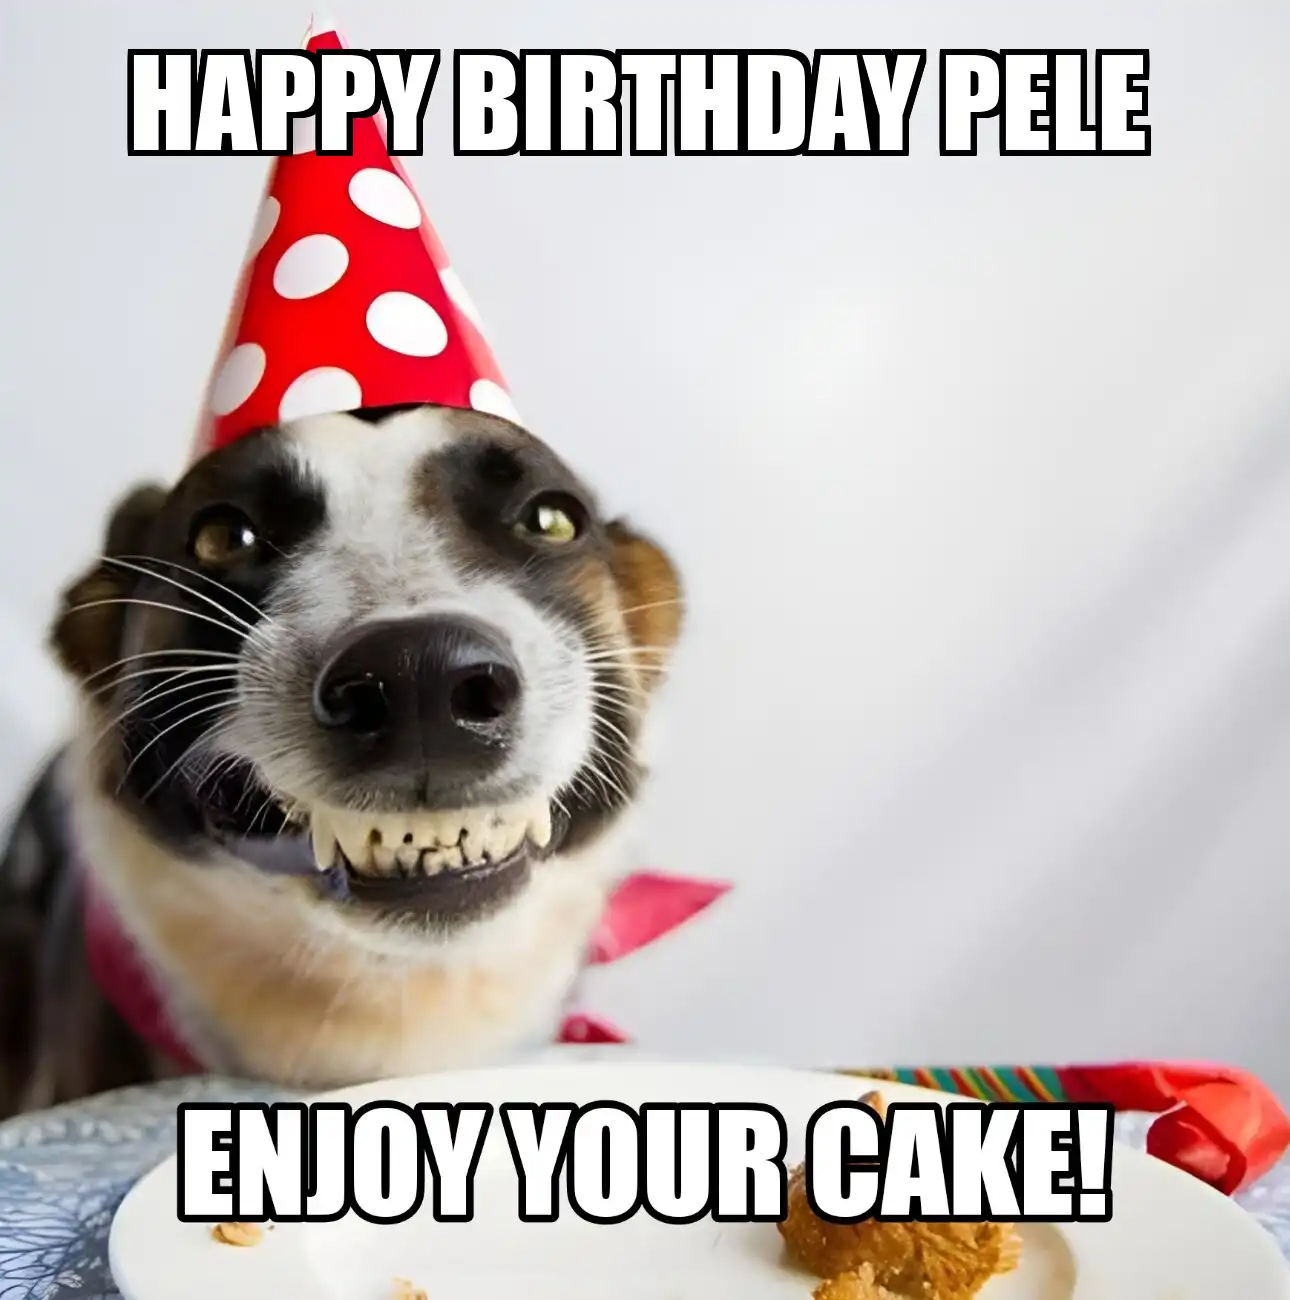 Happy Birthday Pele Enjoy Your Cake Dog Meme